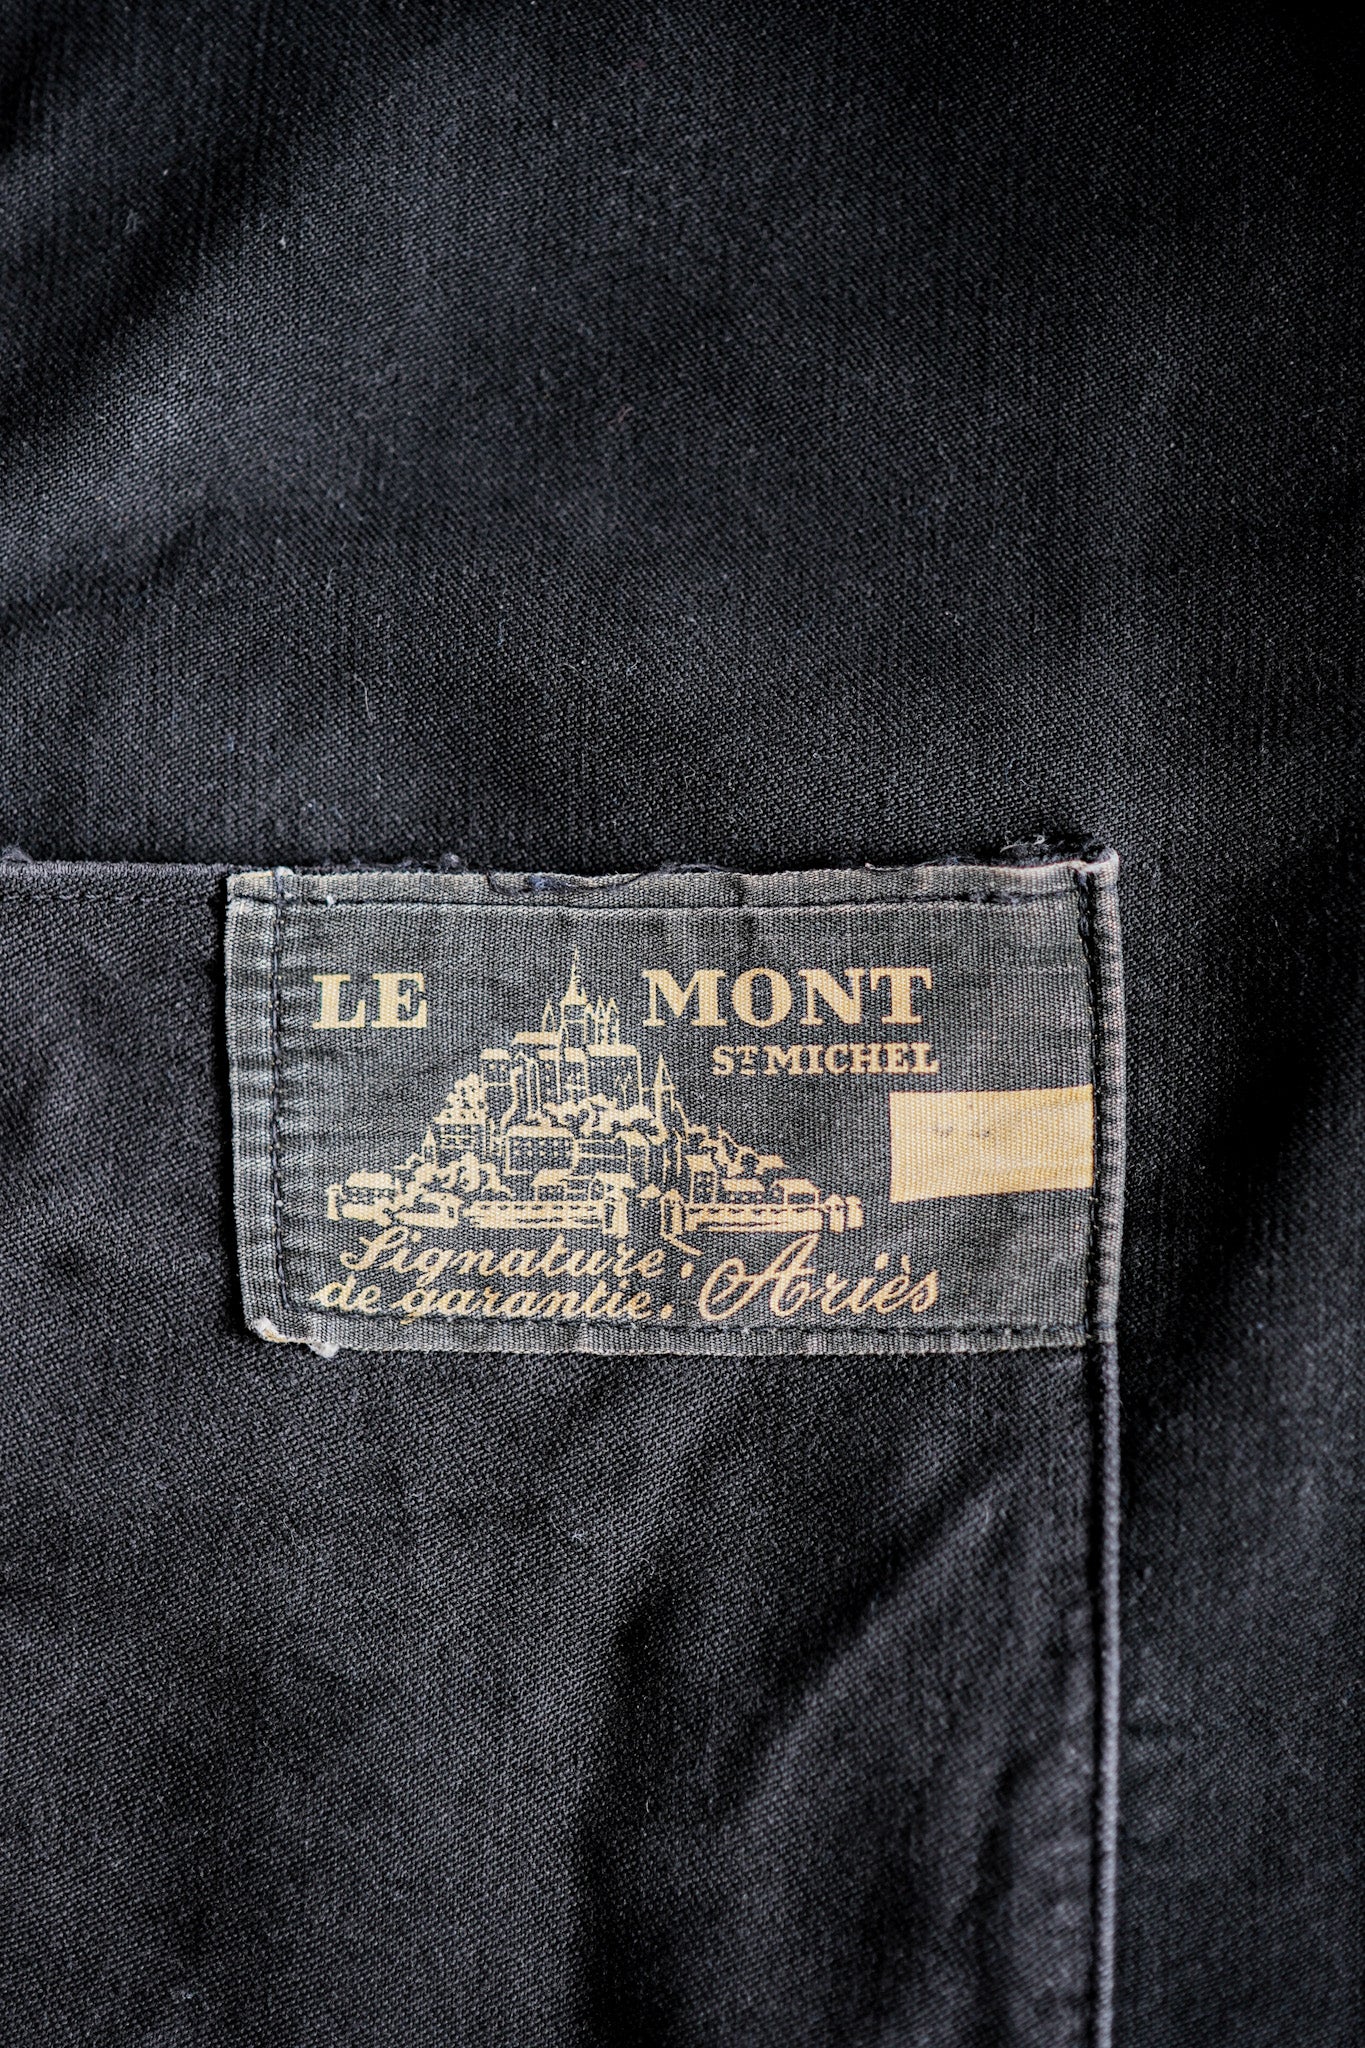 [~ 50's] แจ็คเก็ตตัวตุ่นสีดำวินเทจฝรั่งเศสขนาด 52 "Le Mont St. Michel"